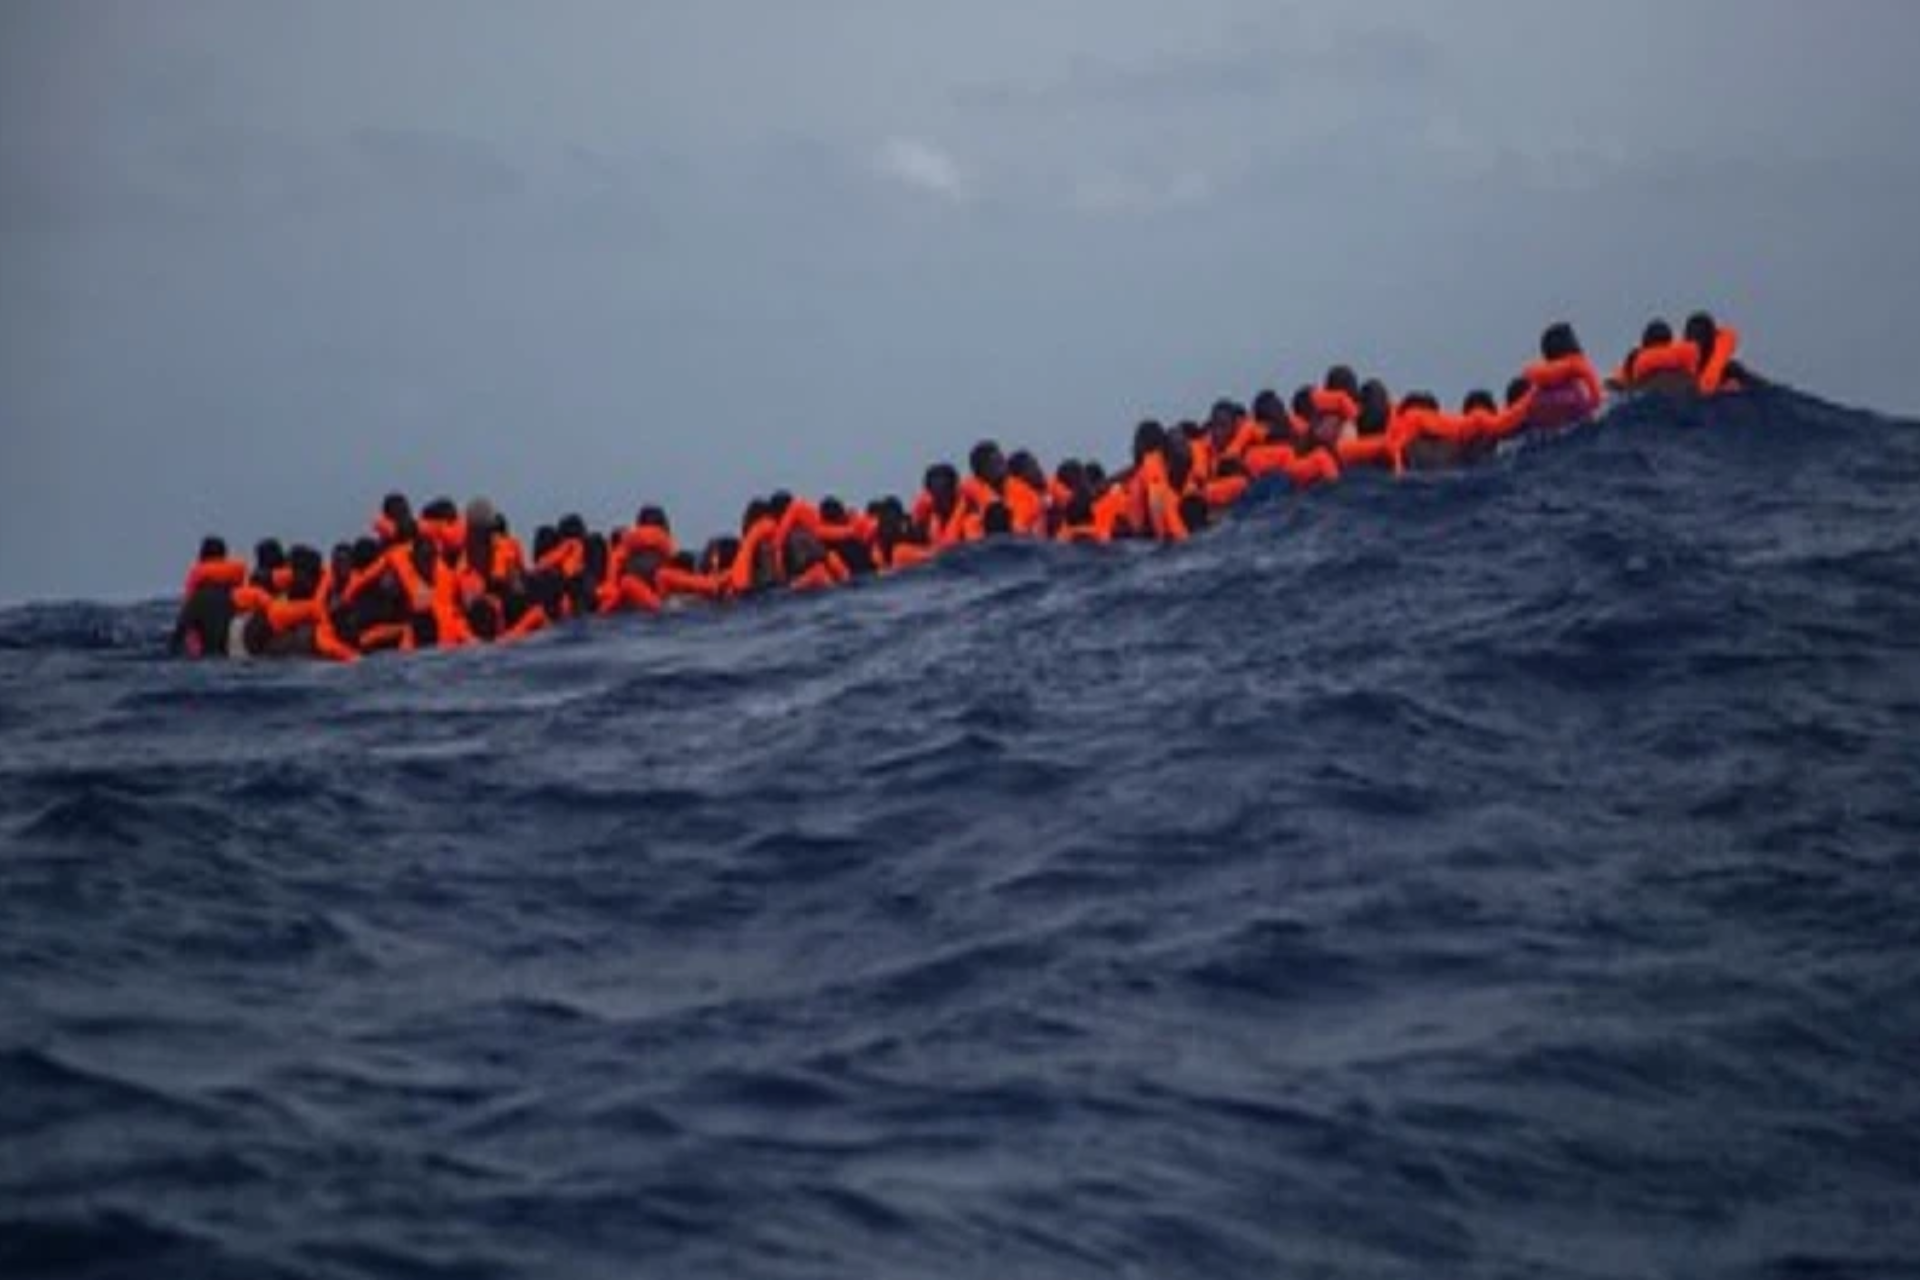 Libyan migrants